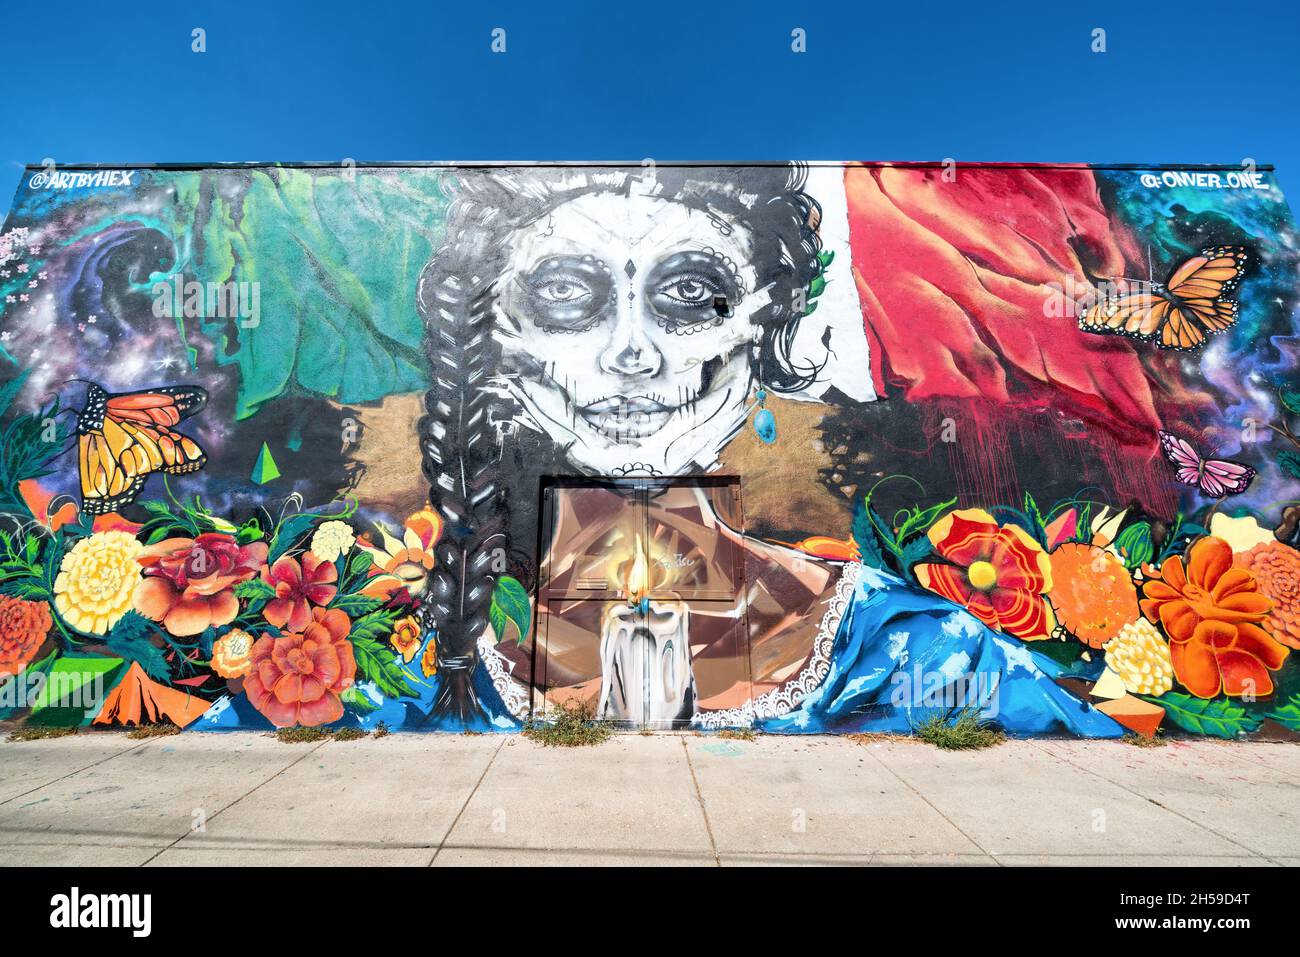 Mural artworks at RiNo art district in Denver, Colorado, USA Stock Photo